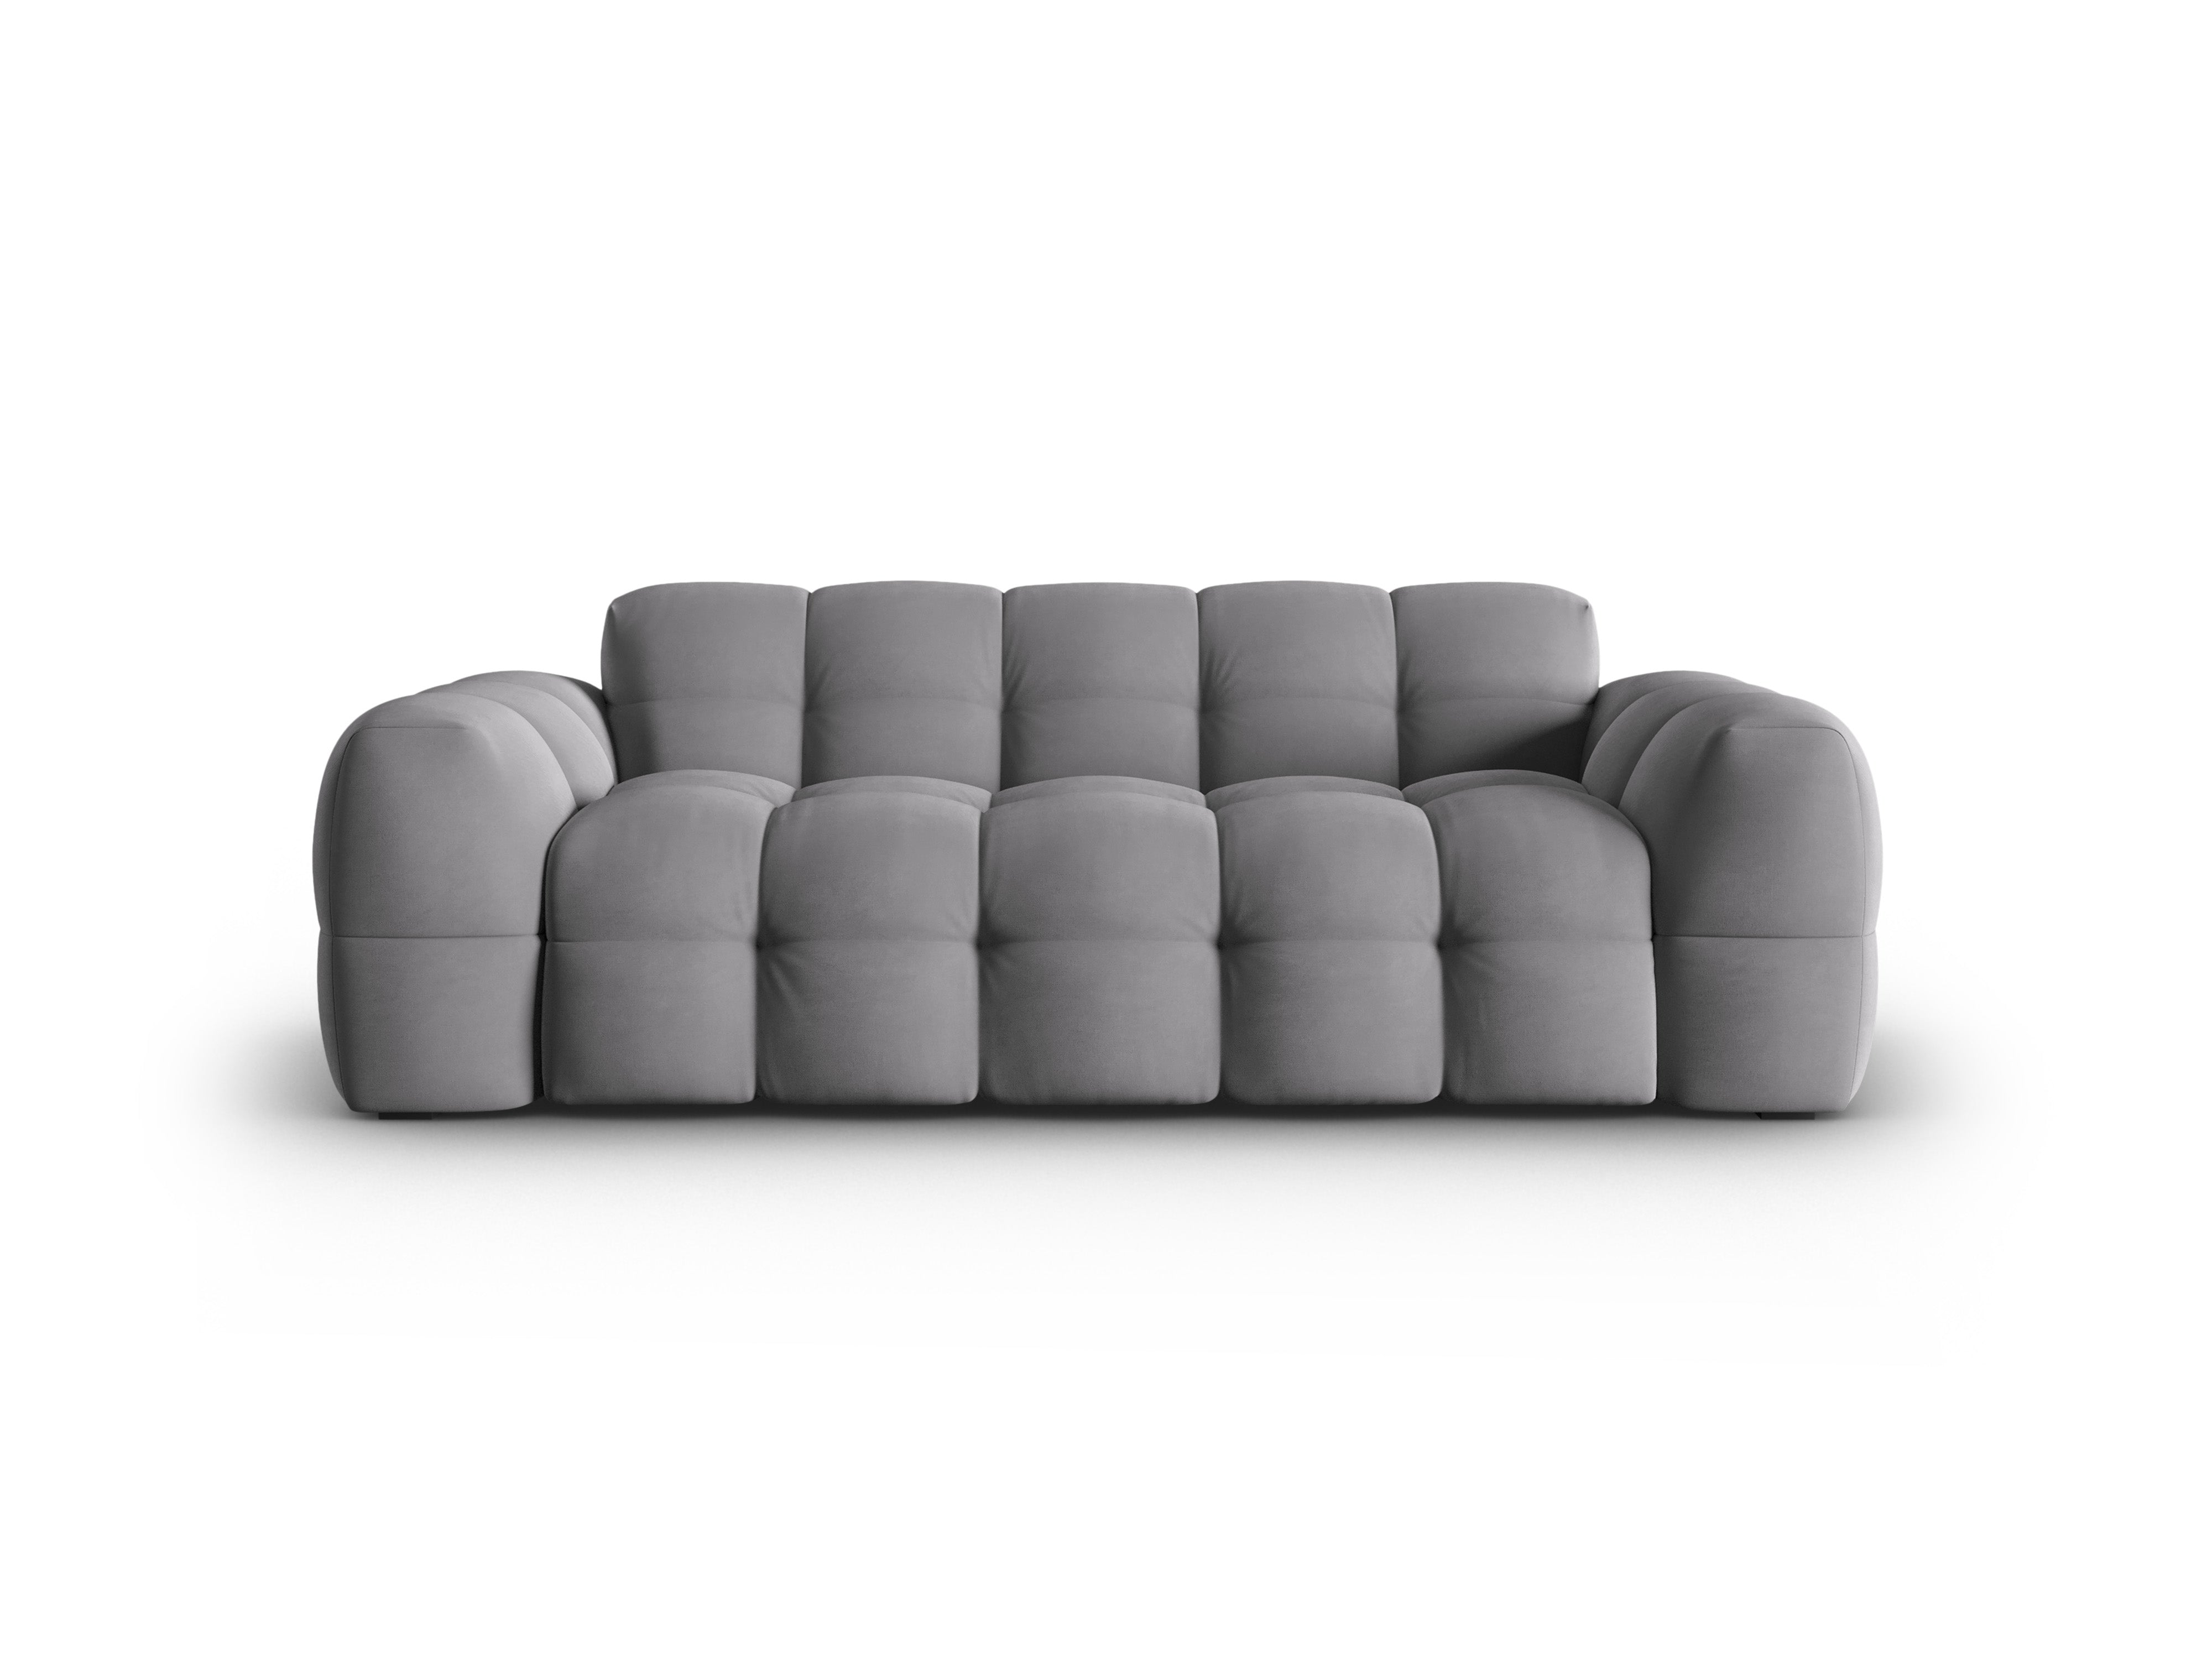 Velvet Sofa, "Nino", 2 Seats, 208x105x68
Made in Europe, Maison Heritage, Eye on Design